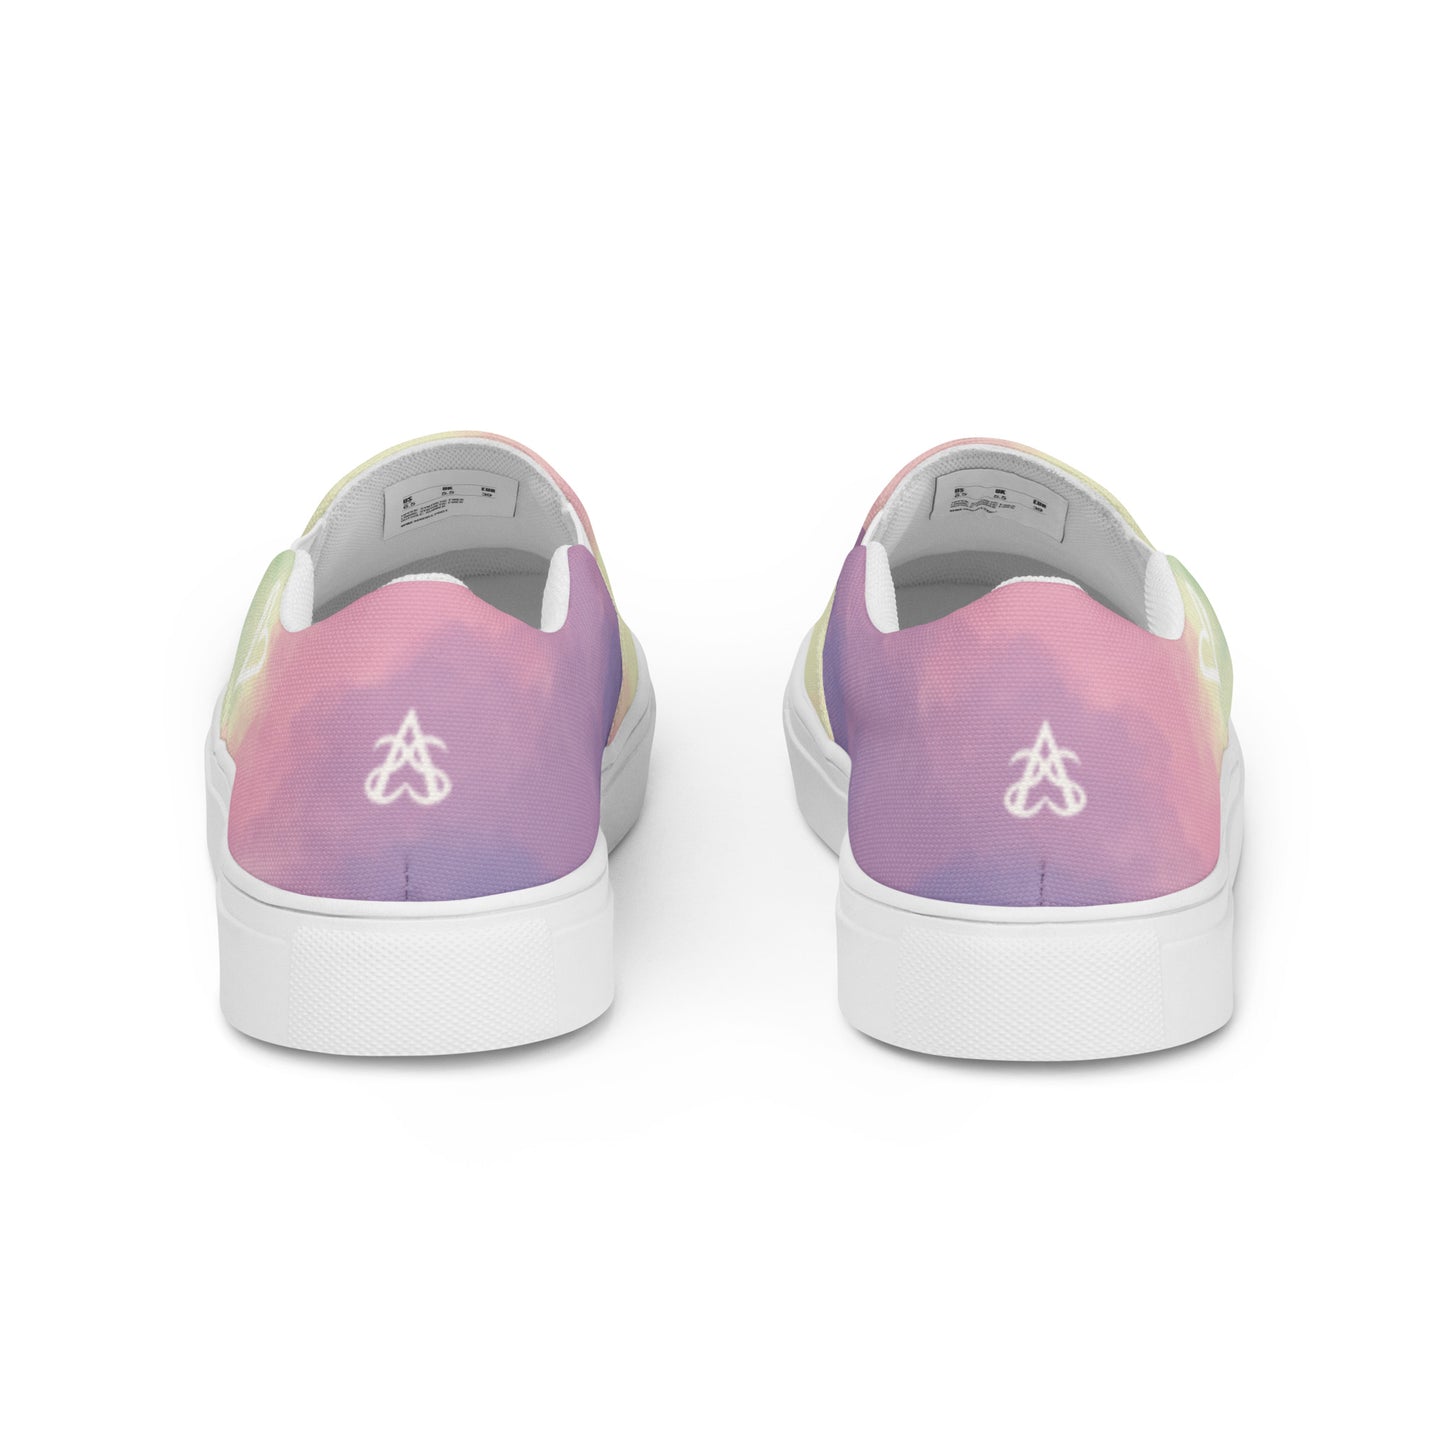 Cloudy Genderfae Slip-on Canvas Shoes (Fem Sizing)